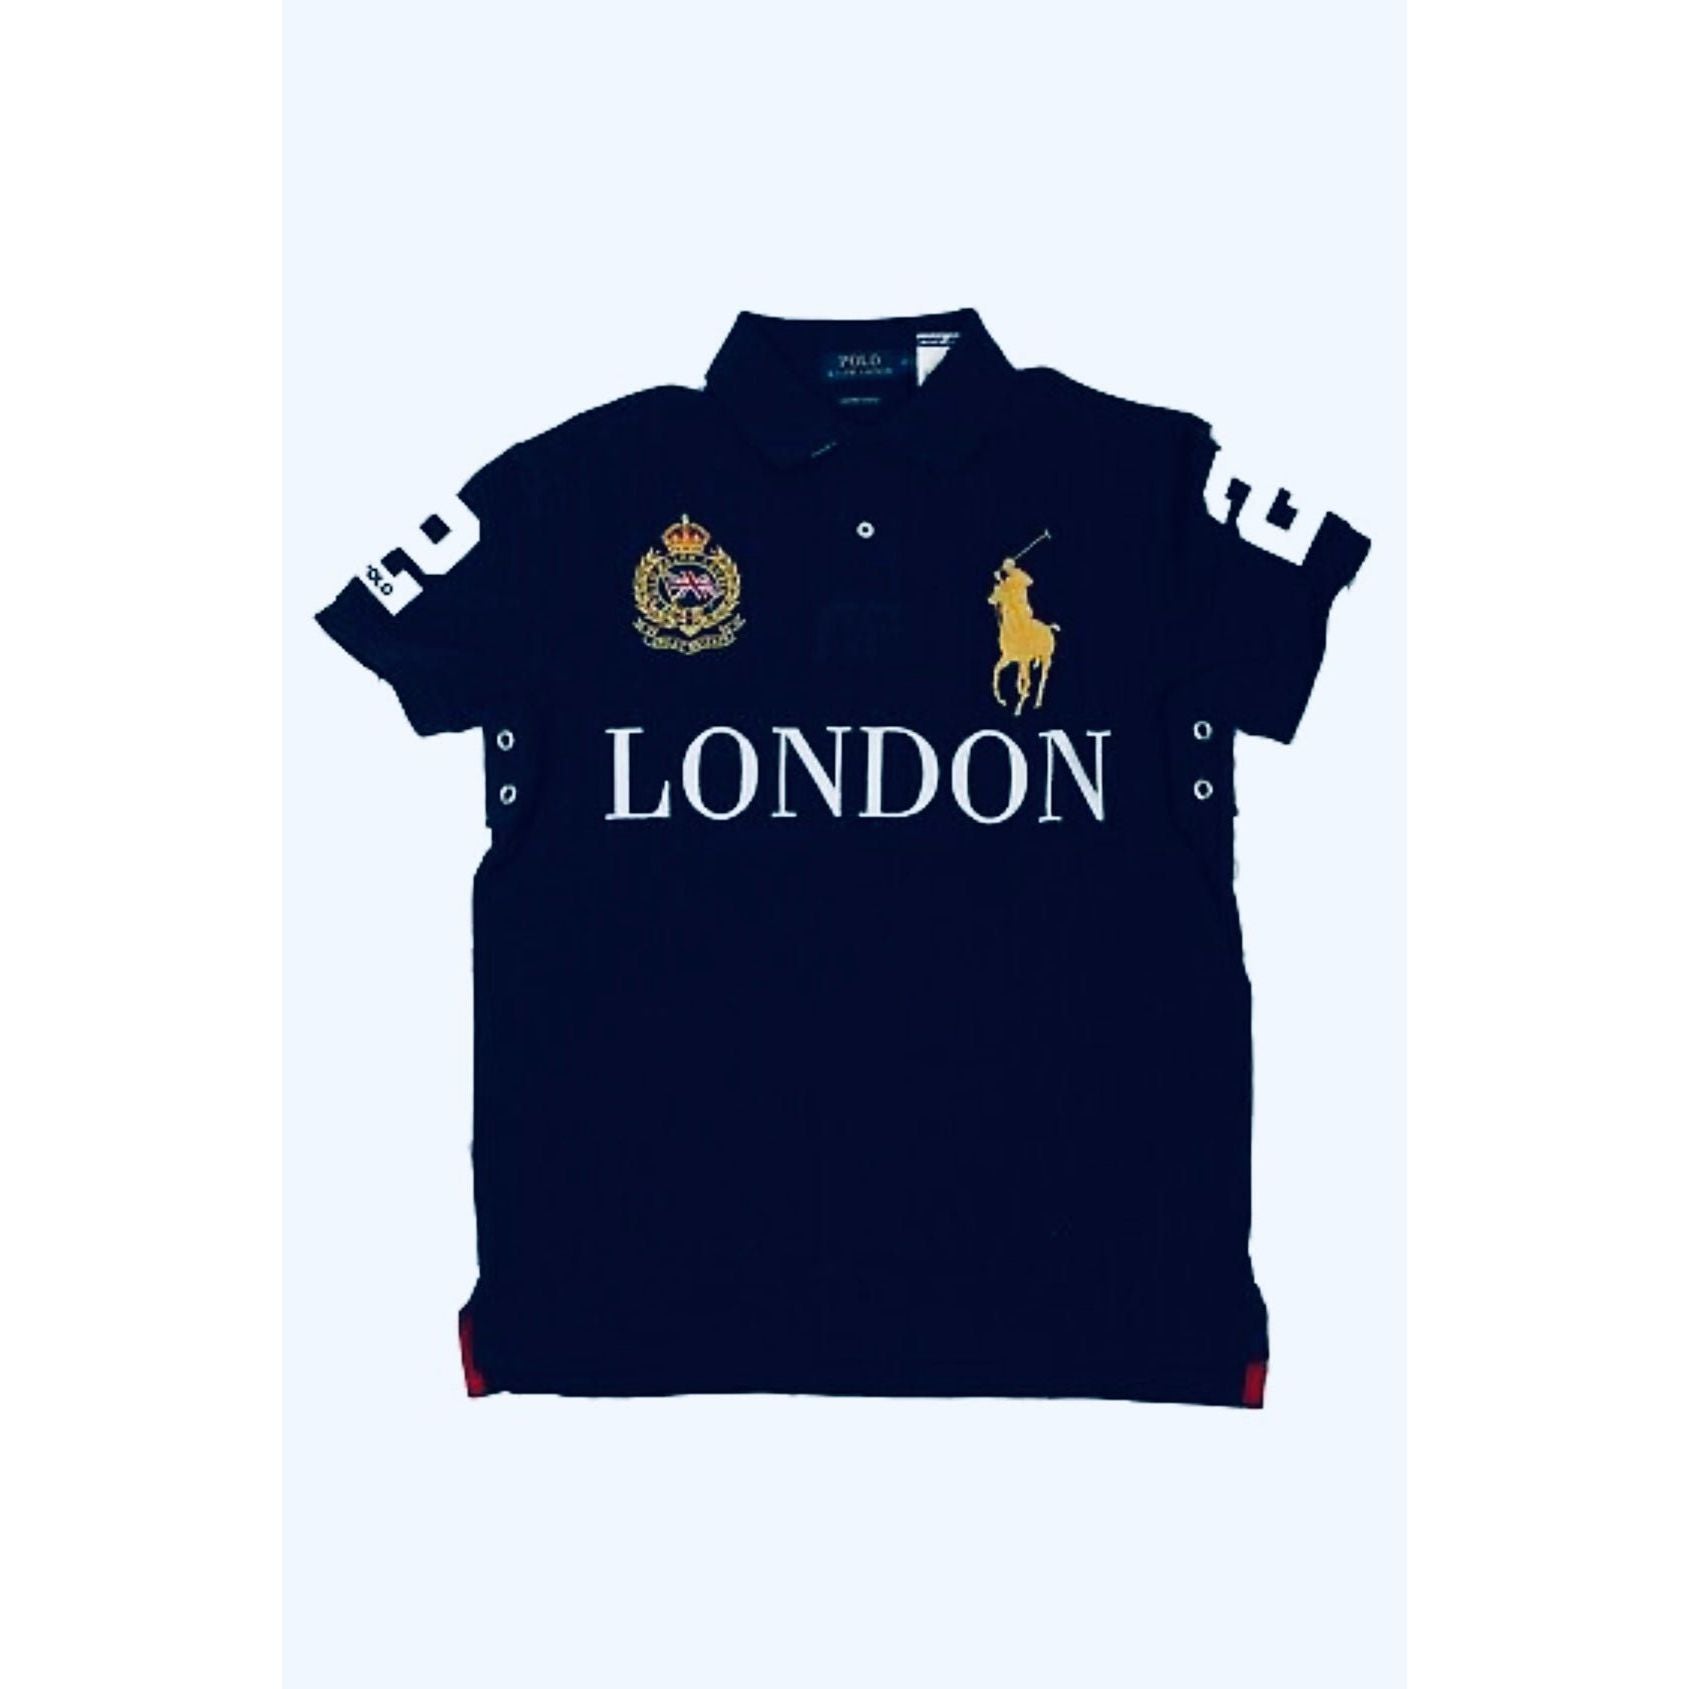 Polo Ralph Lauren-Ralph Lauren Polo Shirt for Men - Big Pony Custom Slim Fit Gold Crest Flag City Shirt (London) - Brandat Outlet